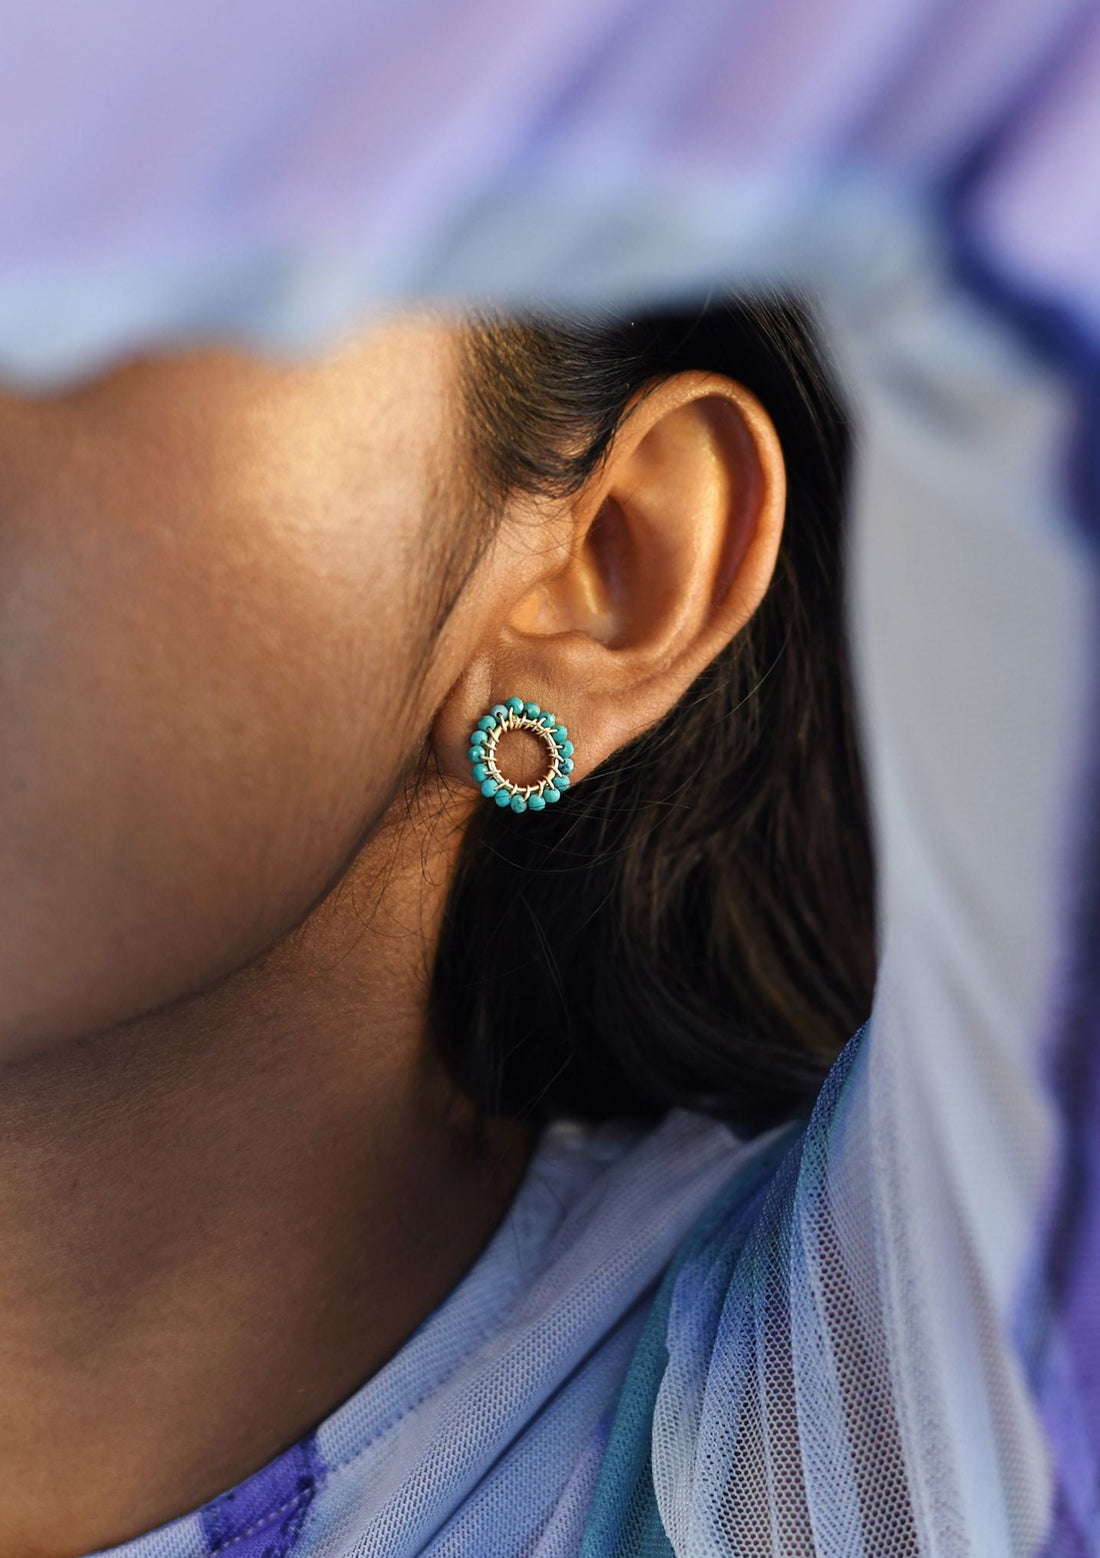 Mini Circle Turquoise Earrings - TURQUOISE